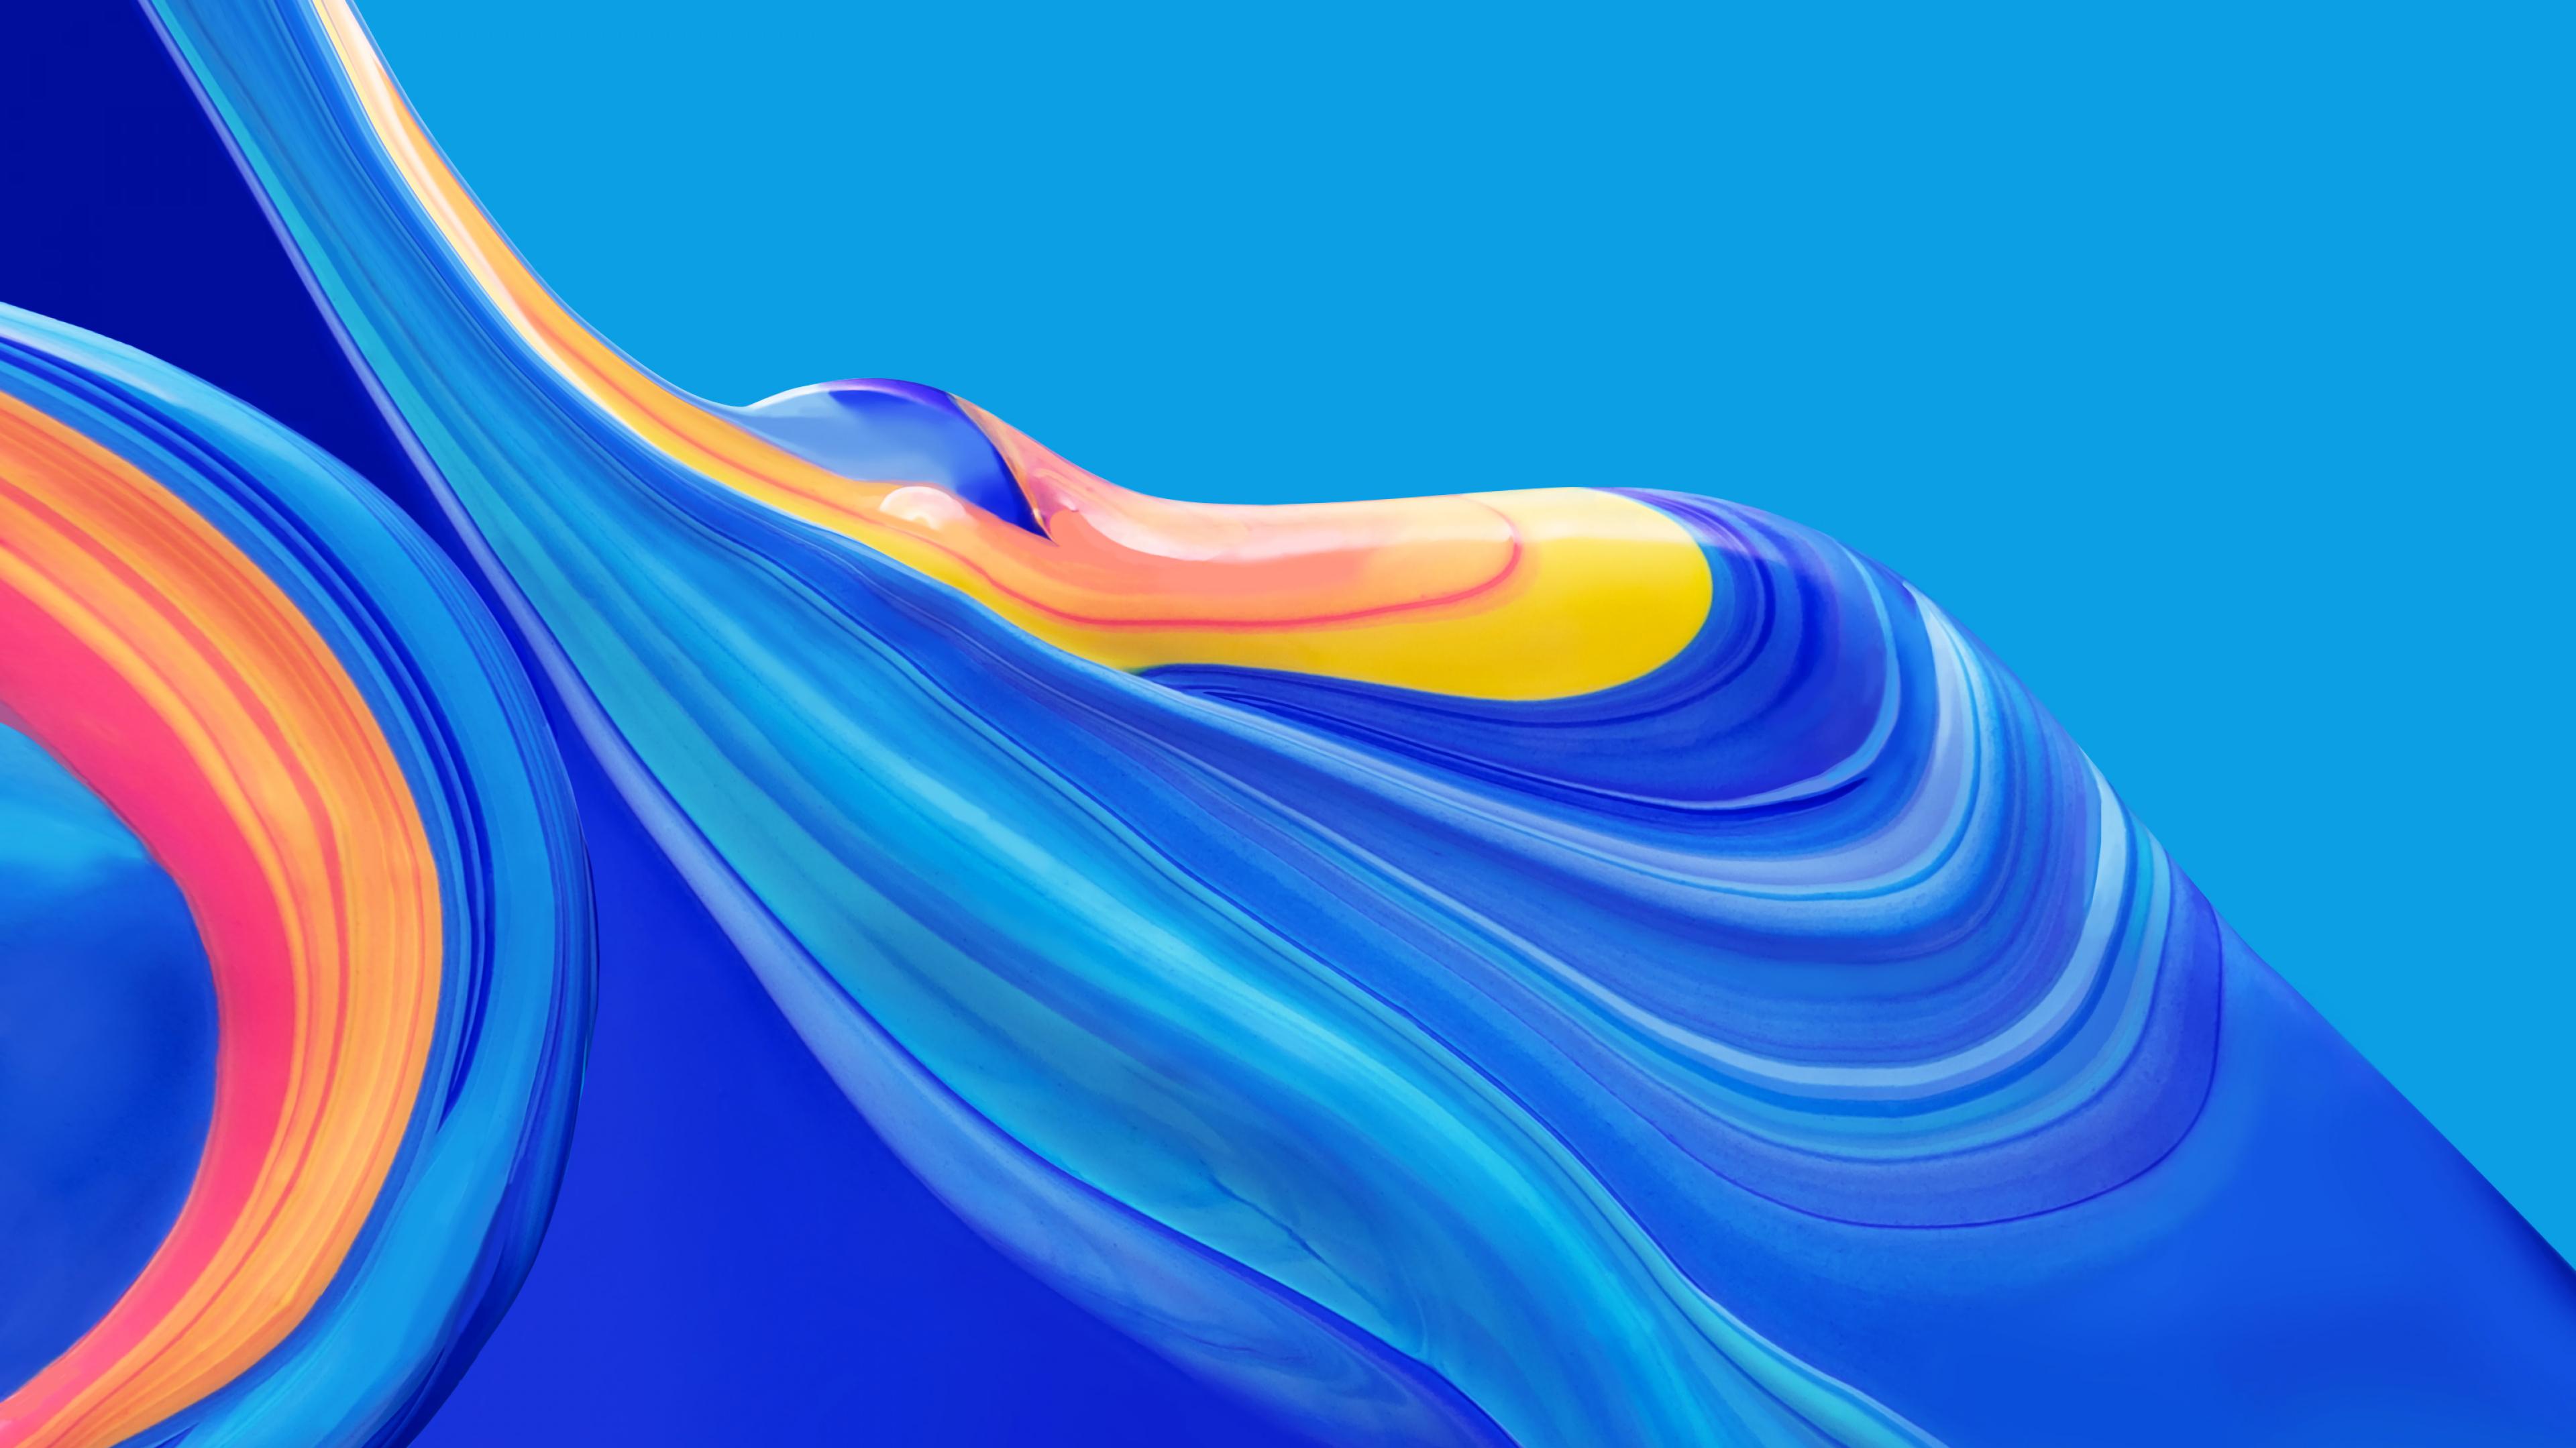 Abstract Blue Wave Digital Art 4K Wallpaper